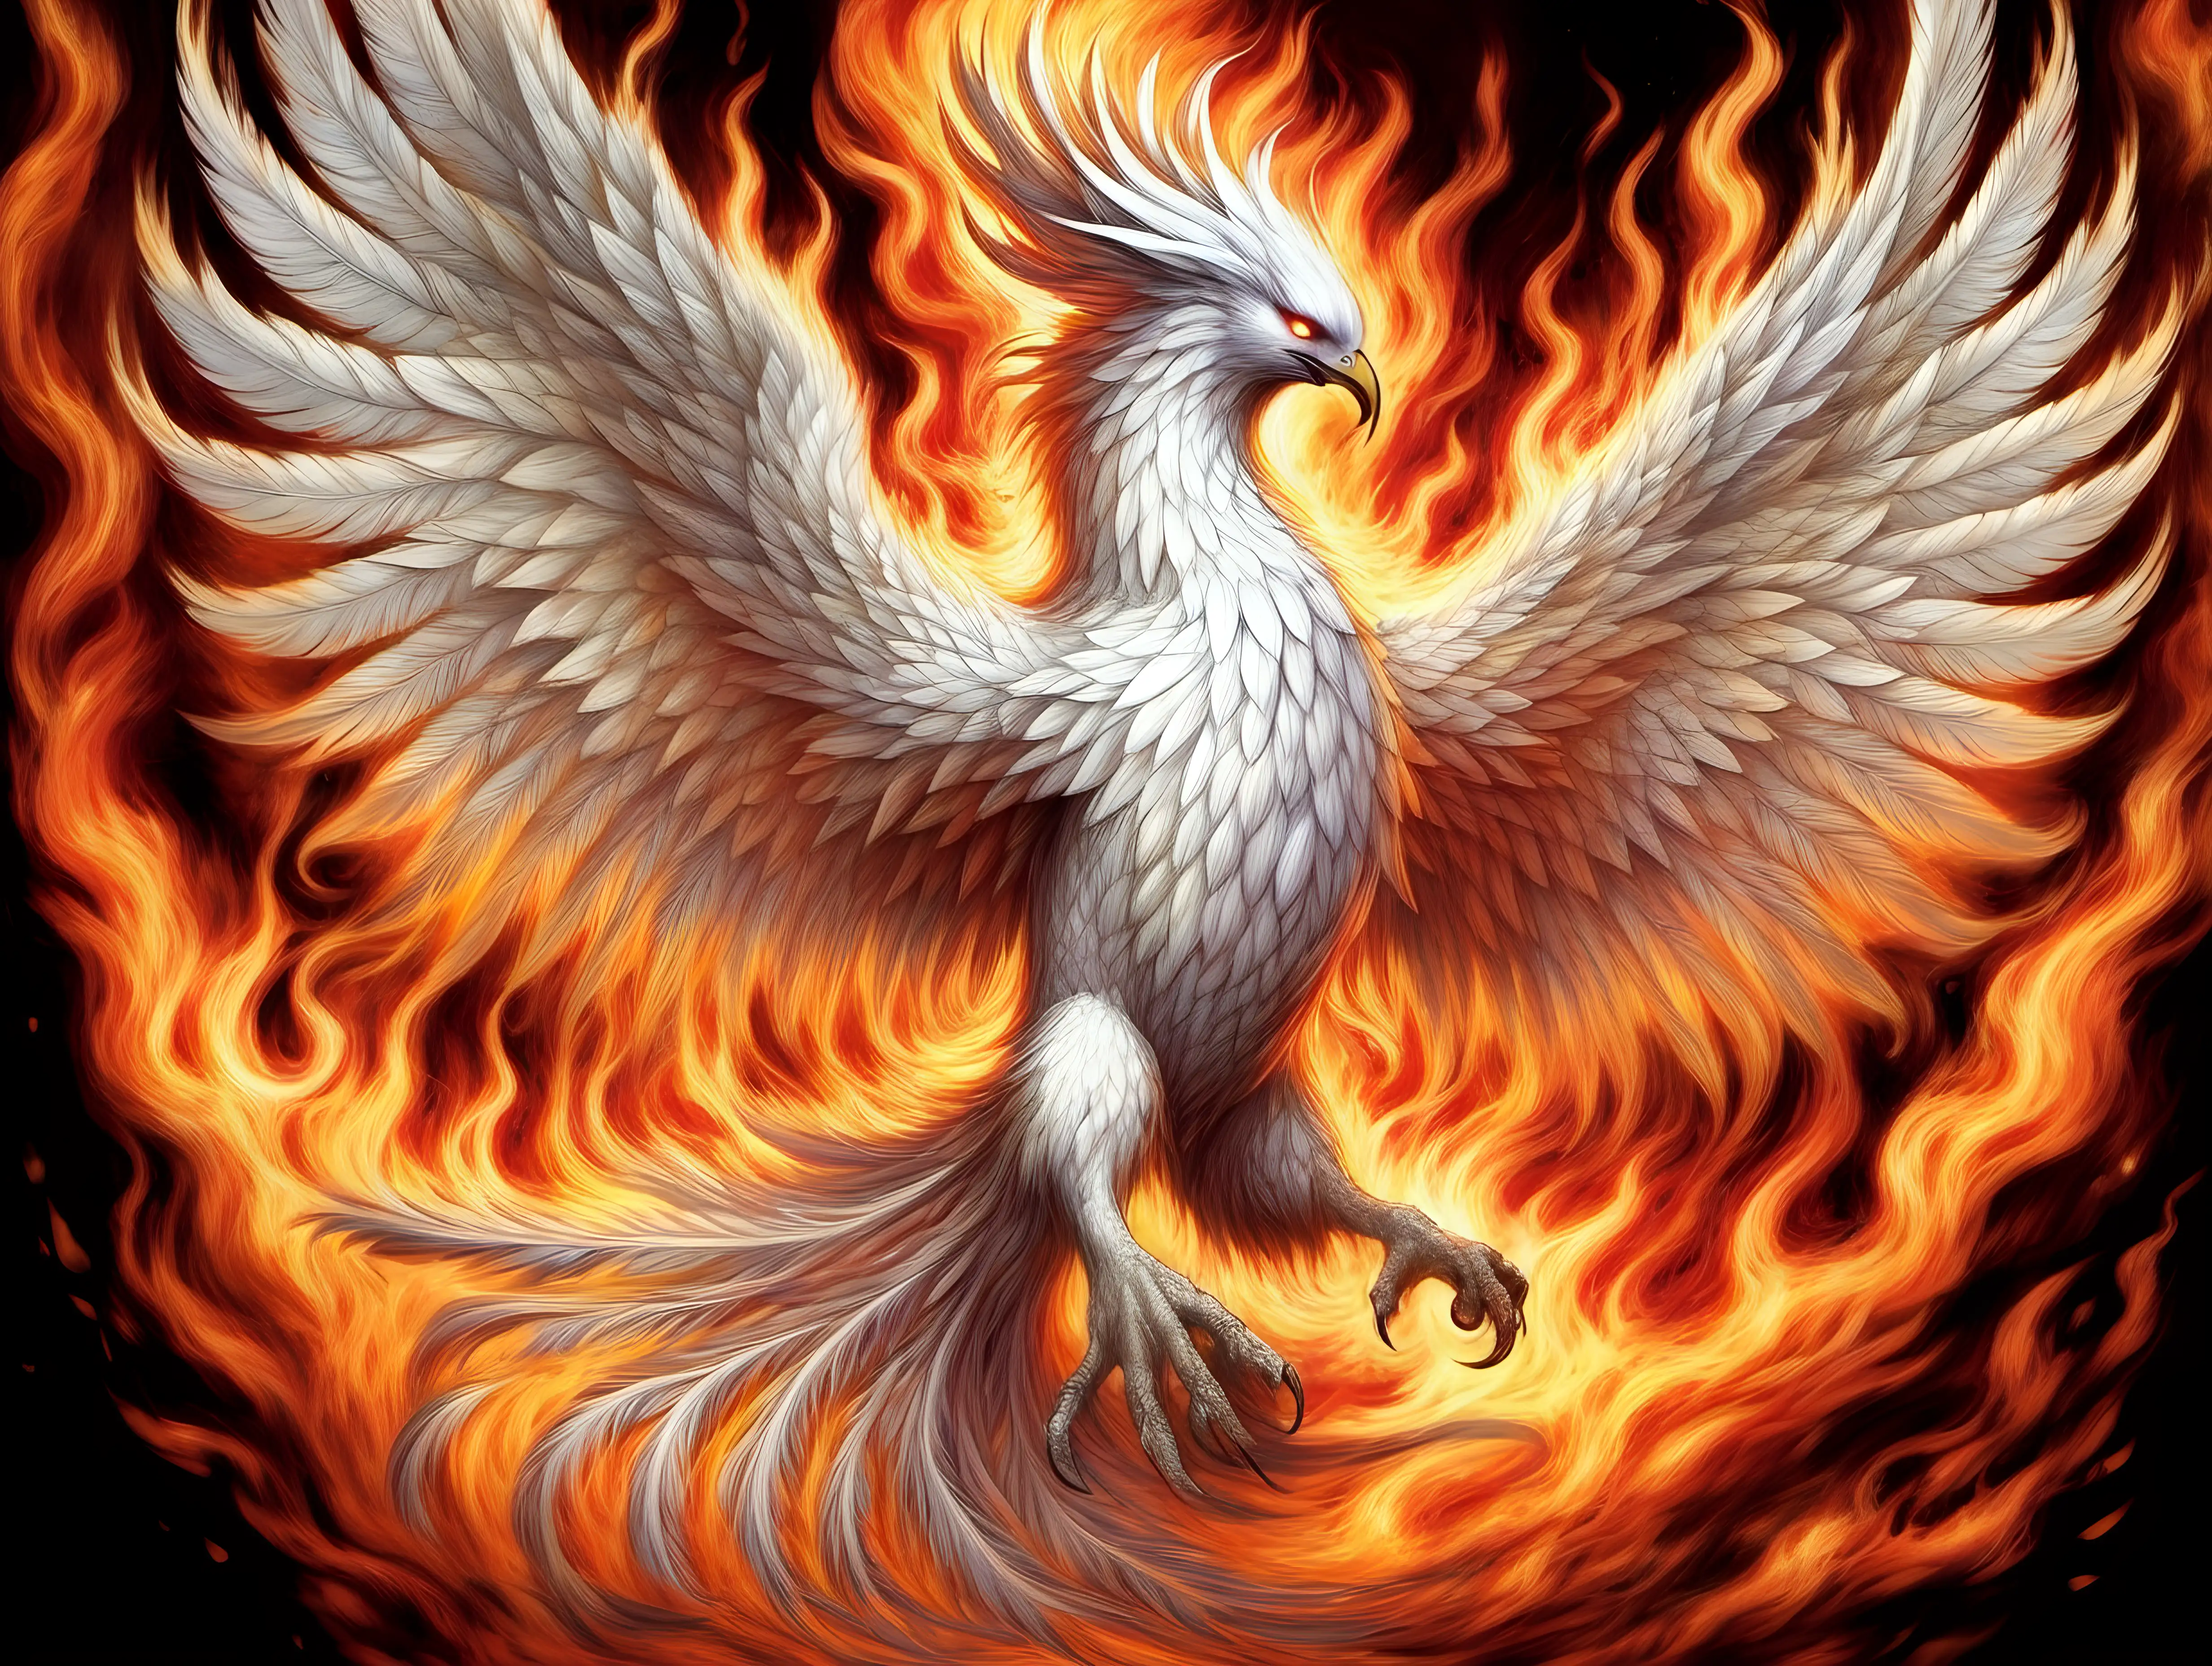 Majestic White Phoenix Rising from Fiery Flames Artwork